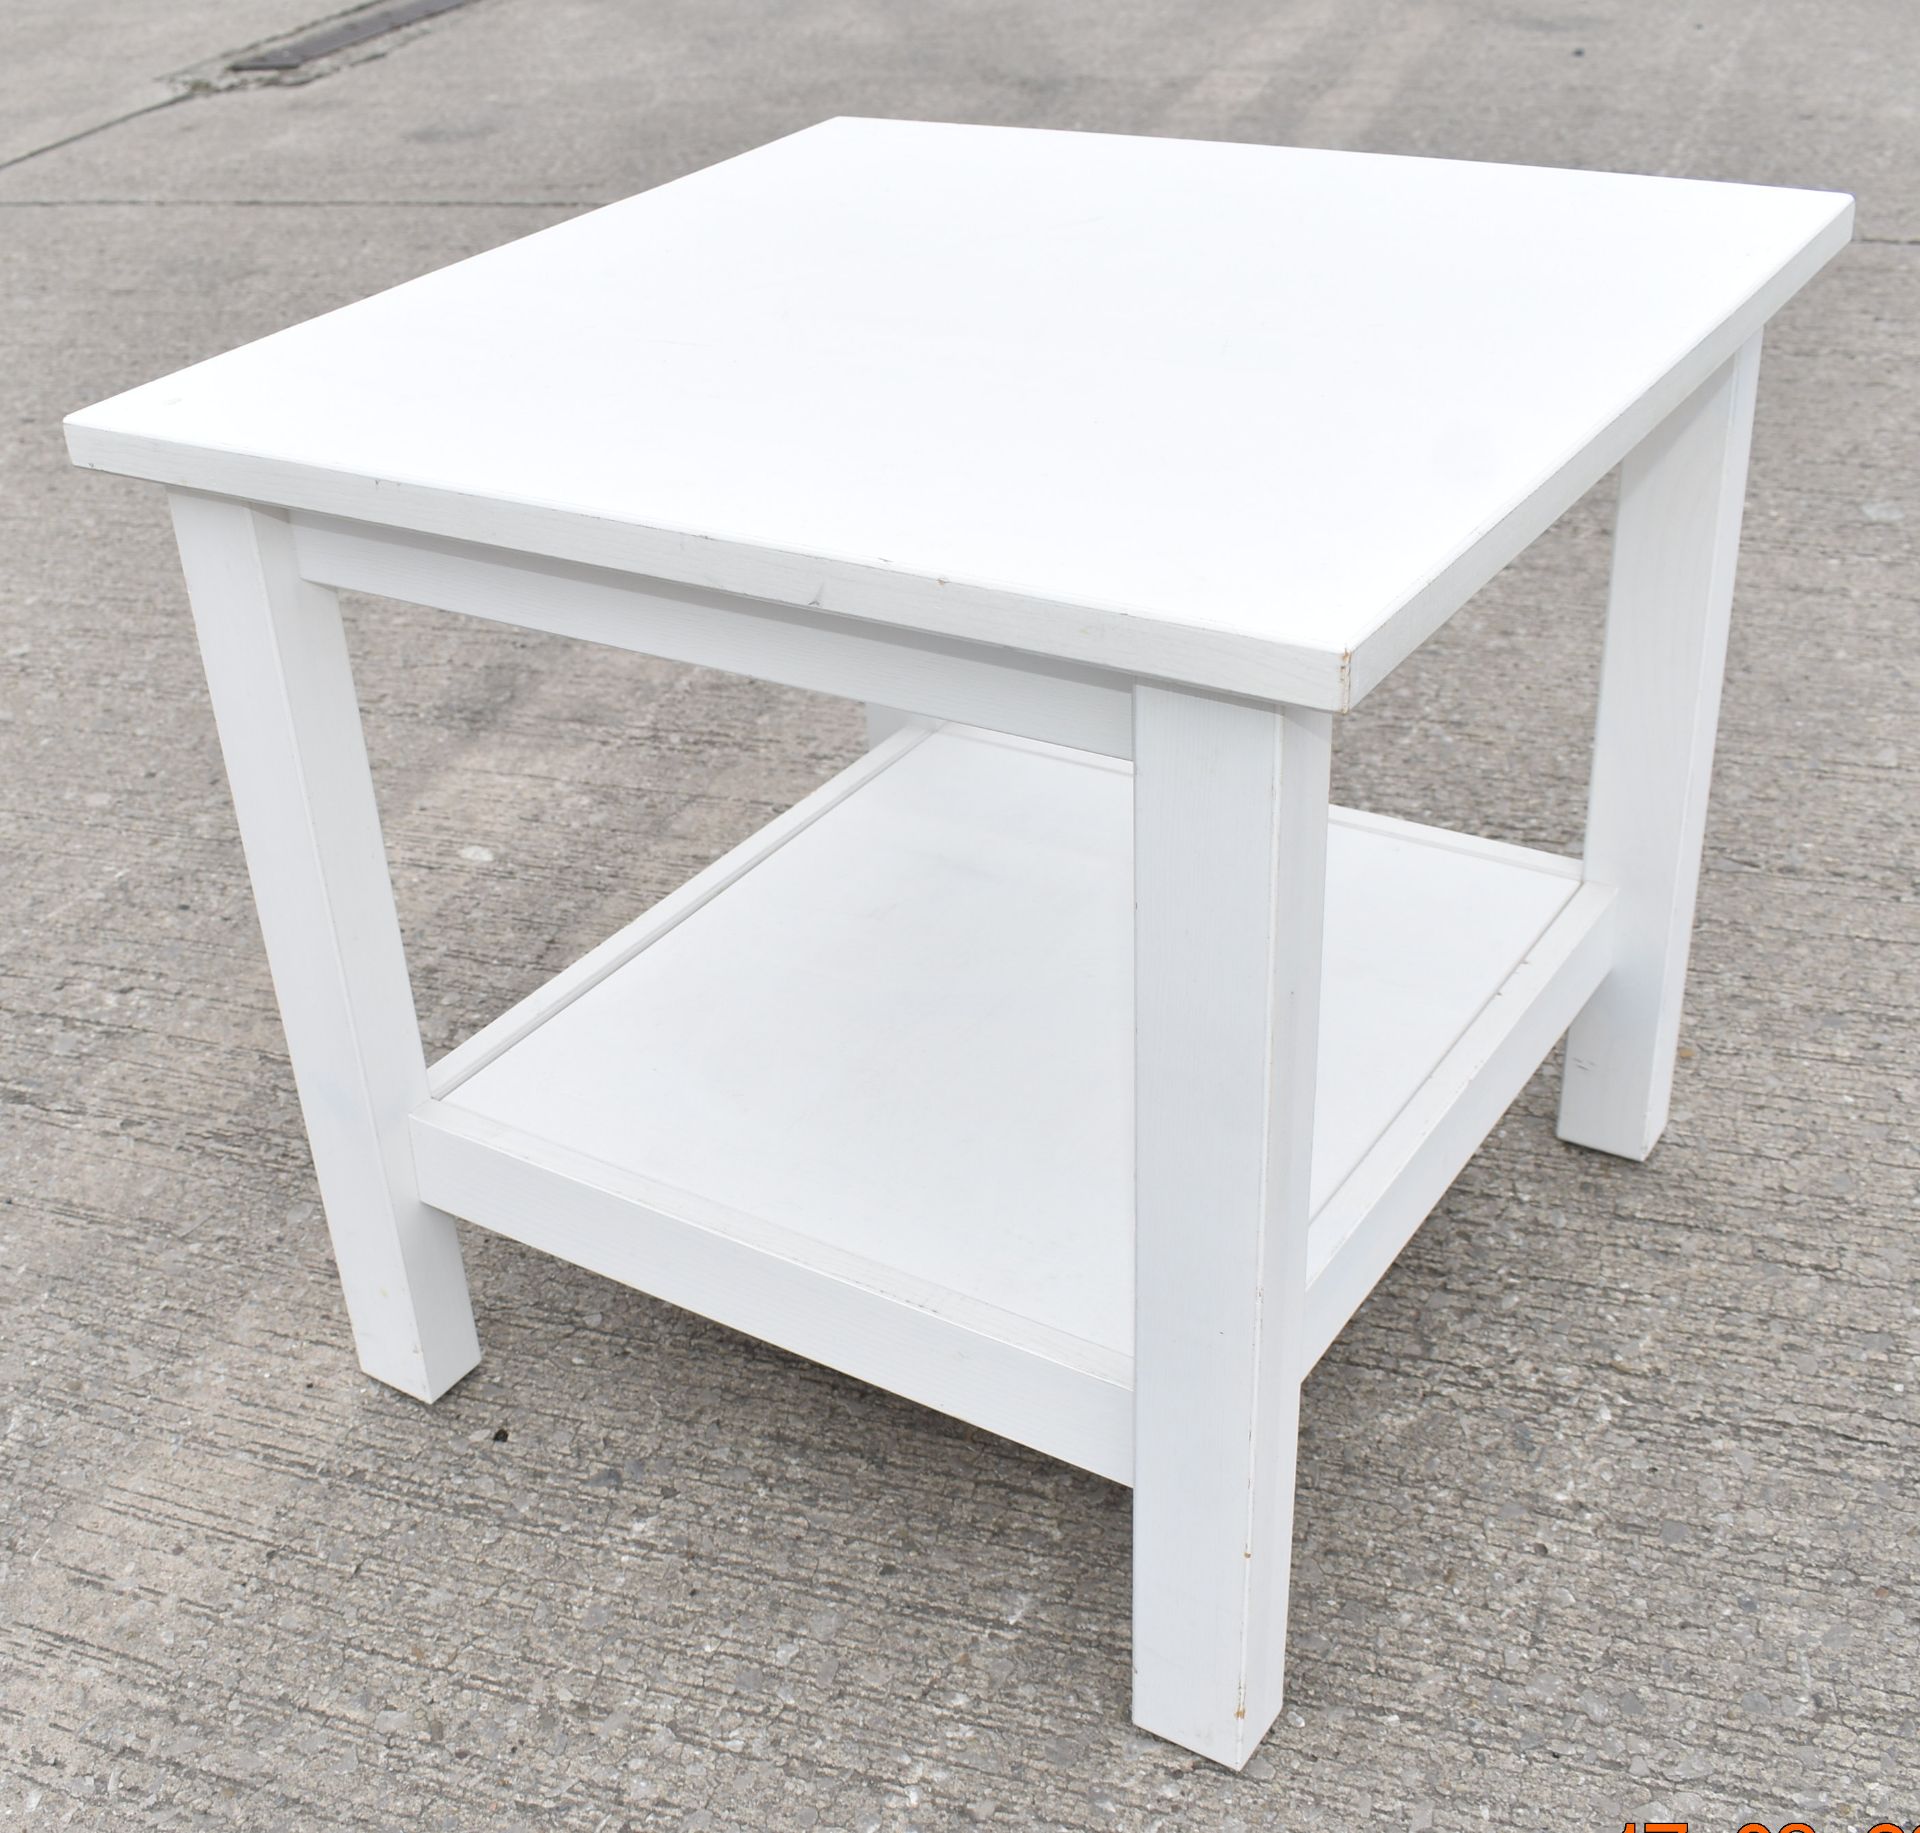 1 x White Square Wooden Table - 56x56x51cm - Ref: K289 - CL905 - Location: Altrincham WA14*Stock - Image 6 of 9